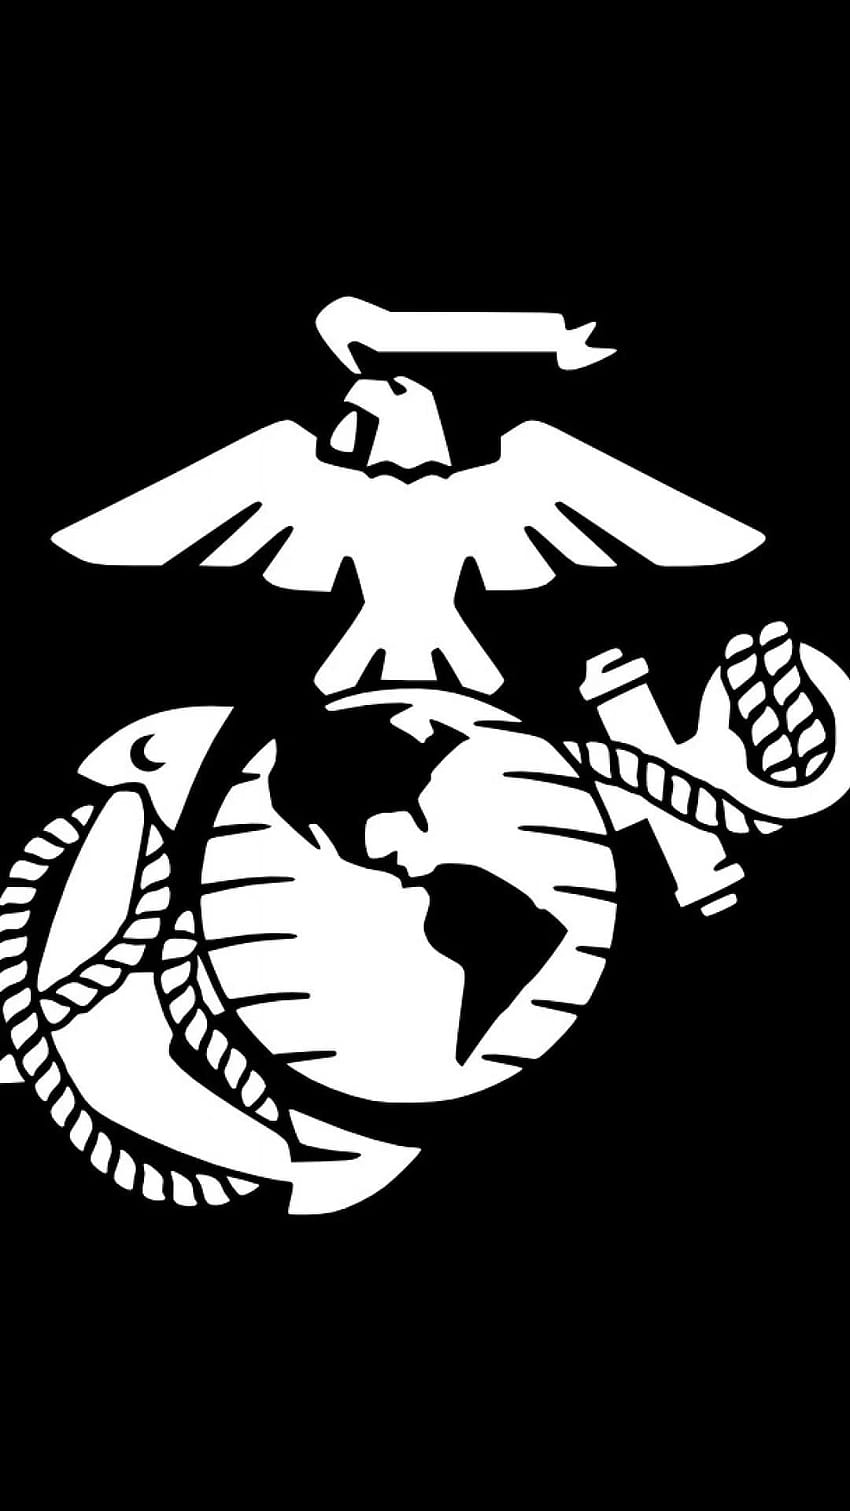 USMC Descubra mais Exército Americano, Forças Armadas, Corpo de Fuzileiros Navais, Corpo de Fuzileiros Navais dos Estados Unidos, Marines dos Estados Unidos wal…, marine logo Papel de parede de celular HD